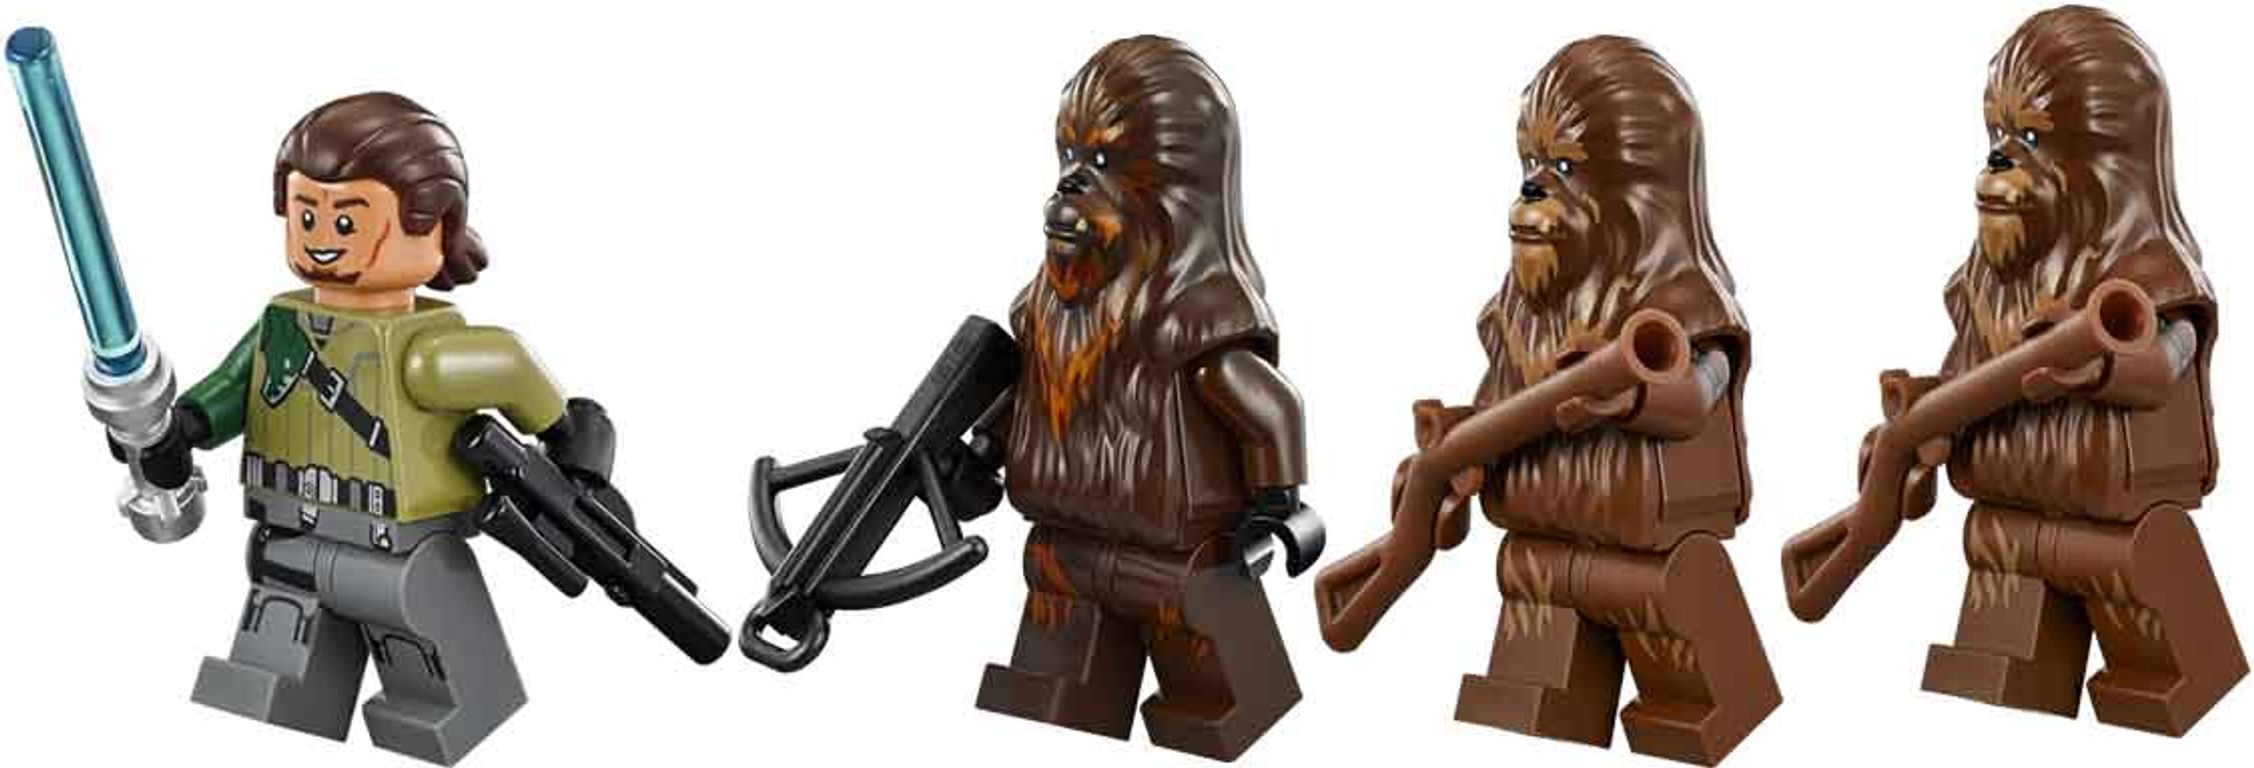 LEGO® Star Wars Wookiee Gunship figurines